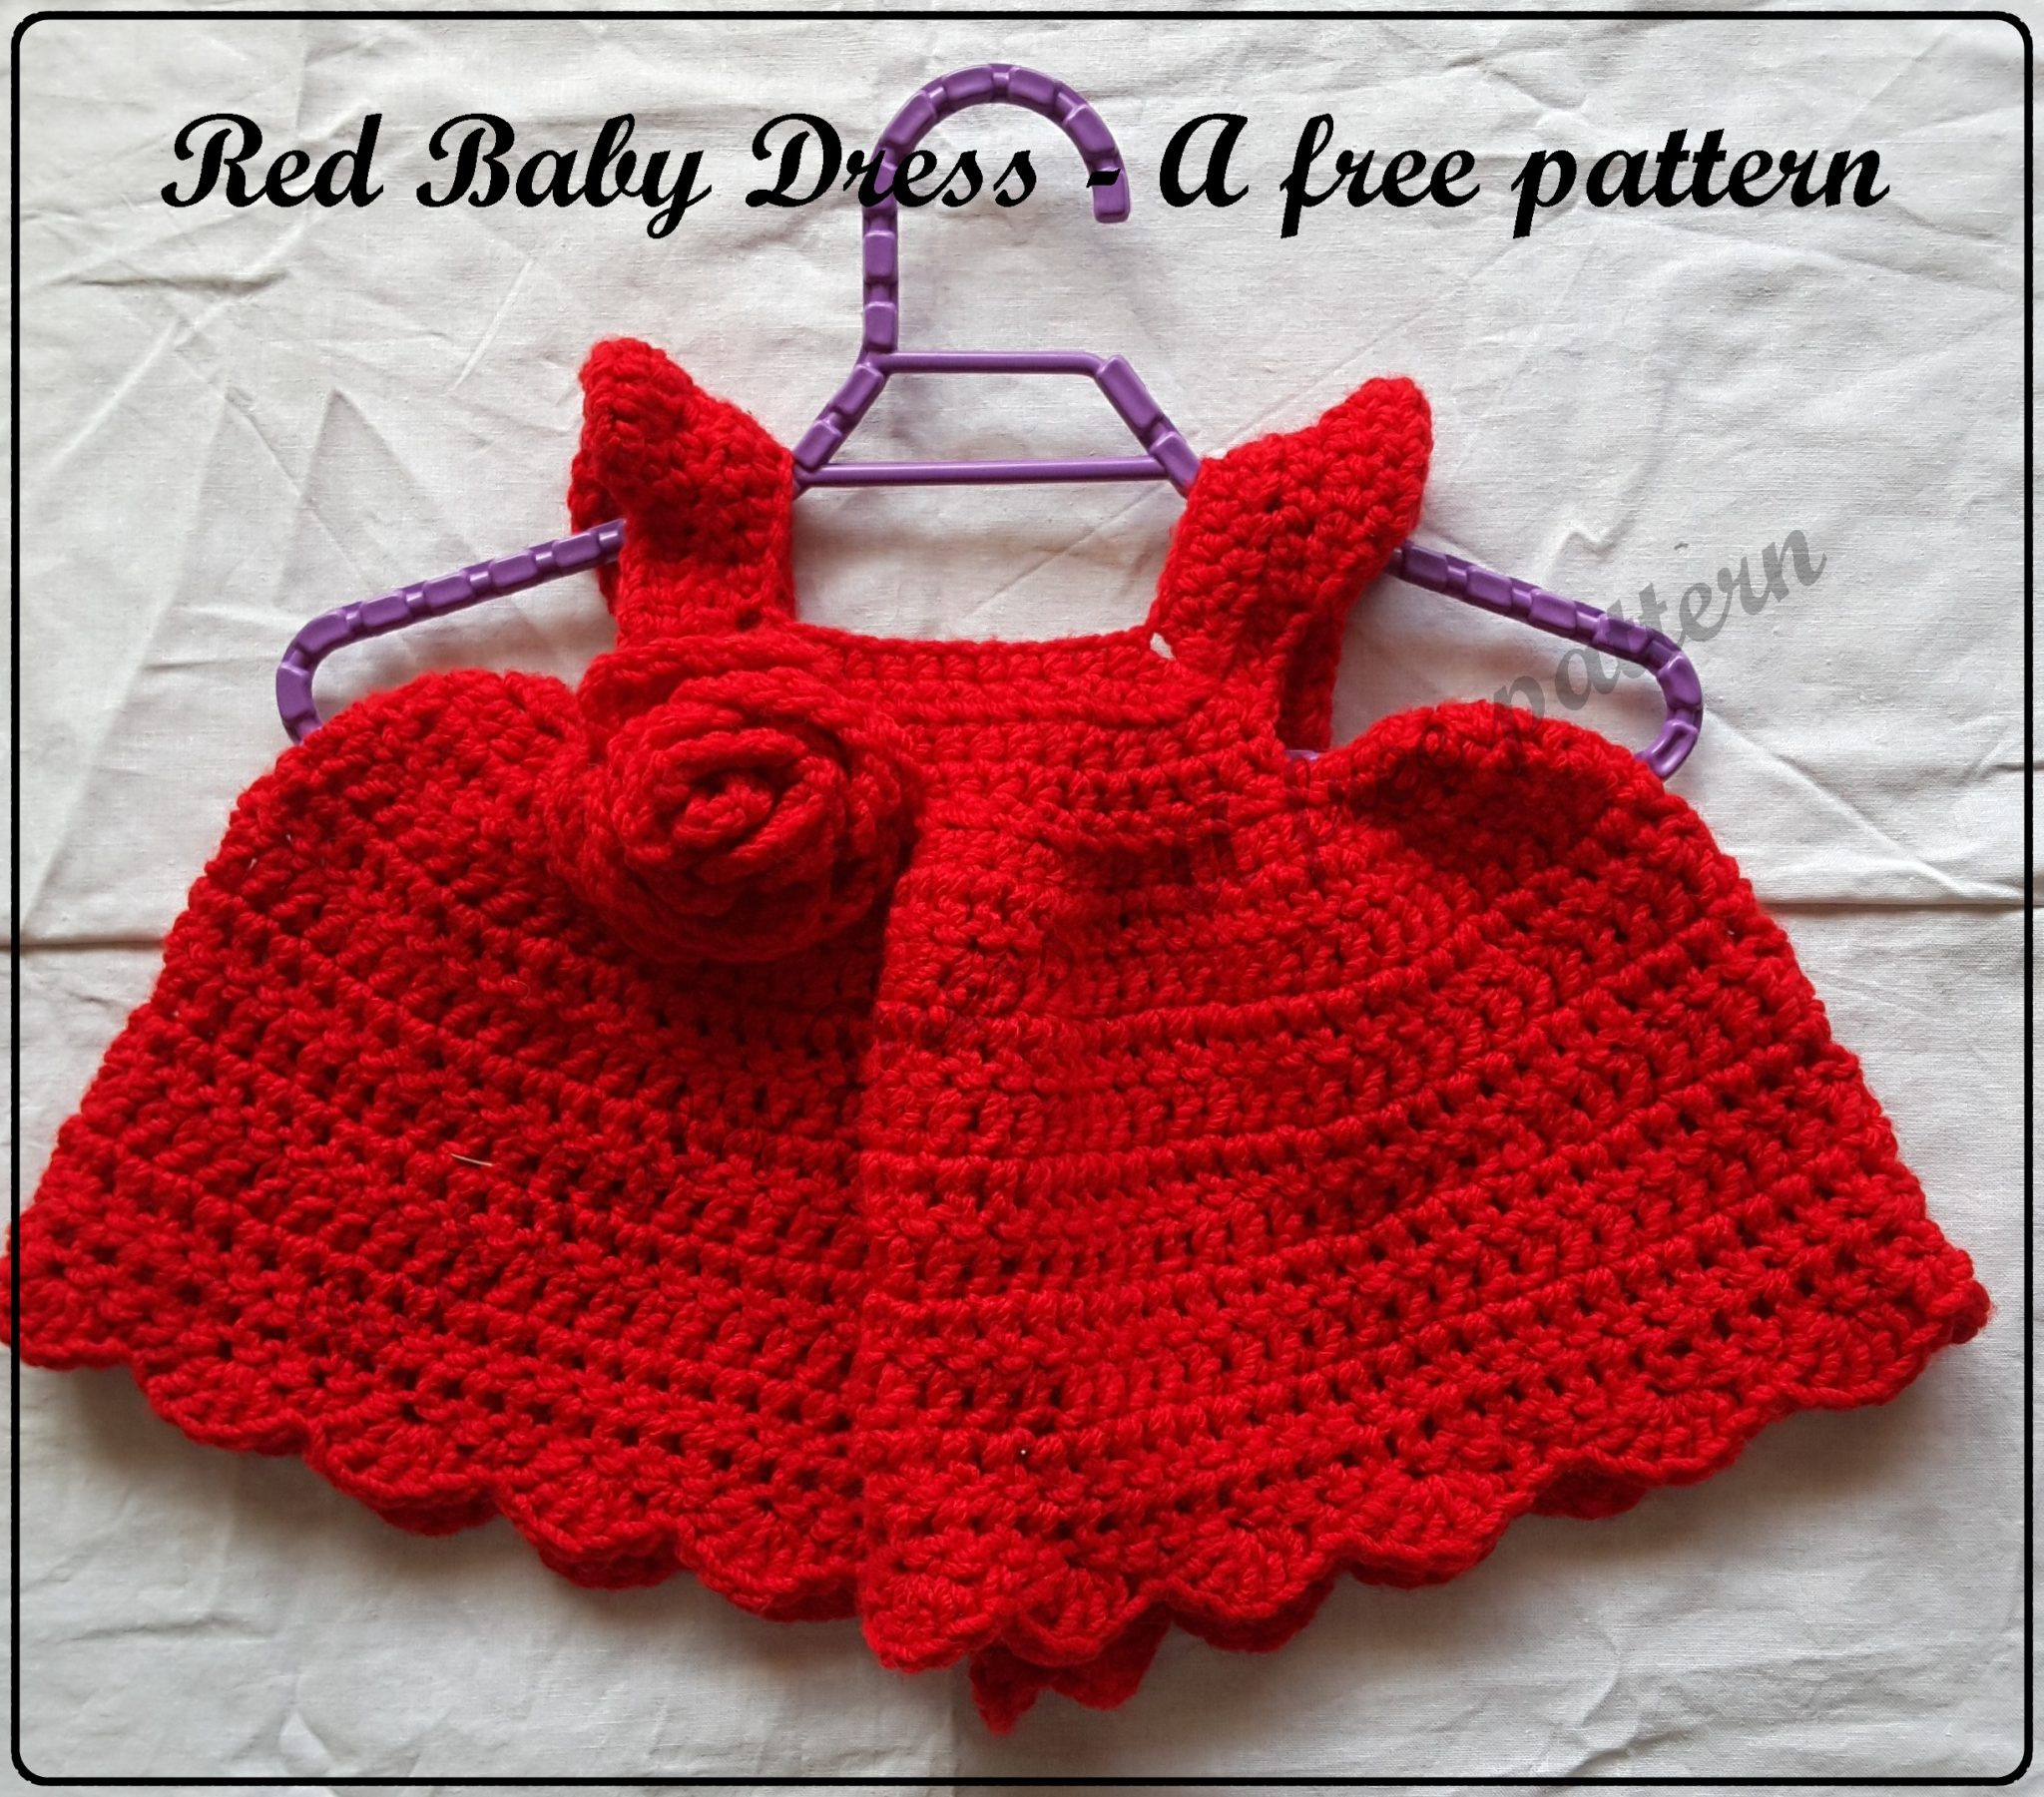 Crochet Baby Dress Free Pattern Red Ba Dress A Free Crochet Pattern Craft Again